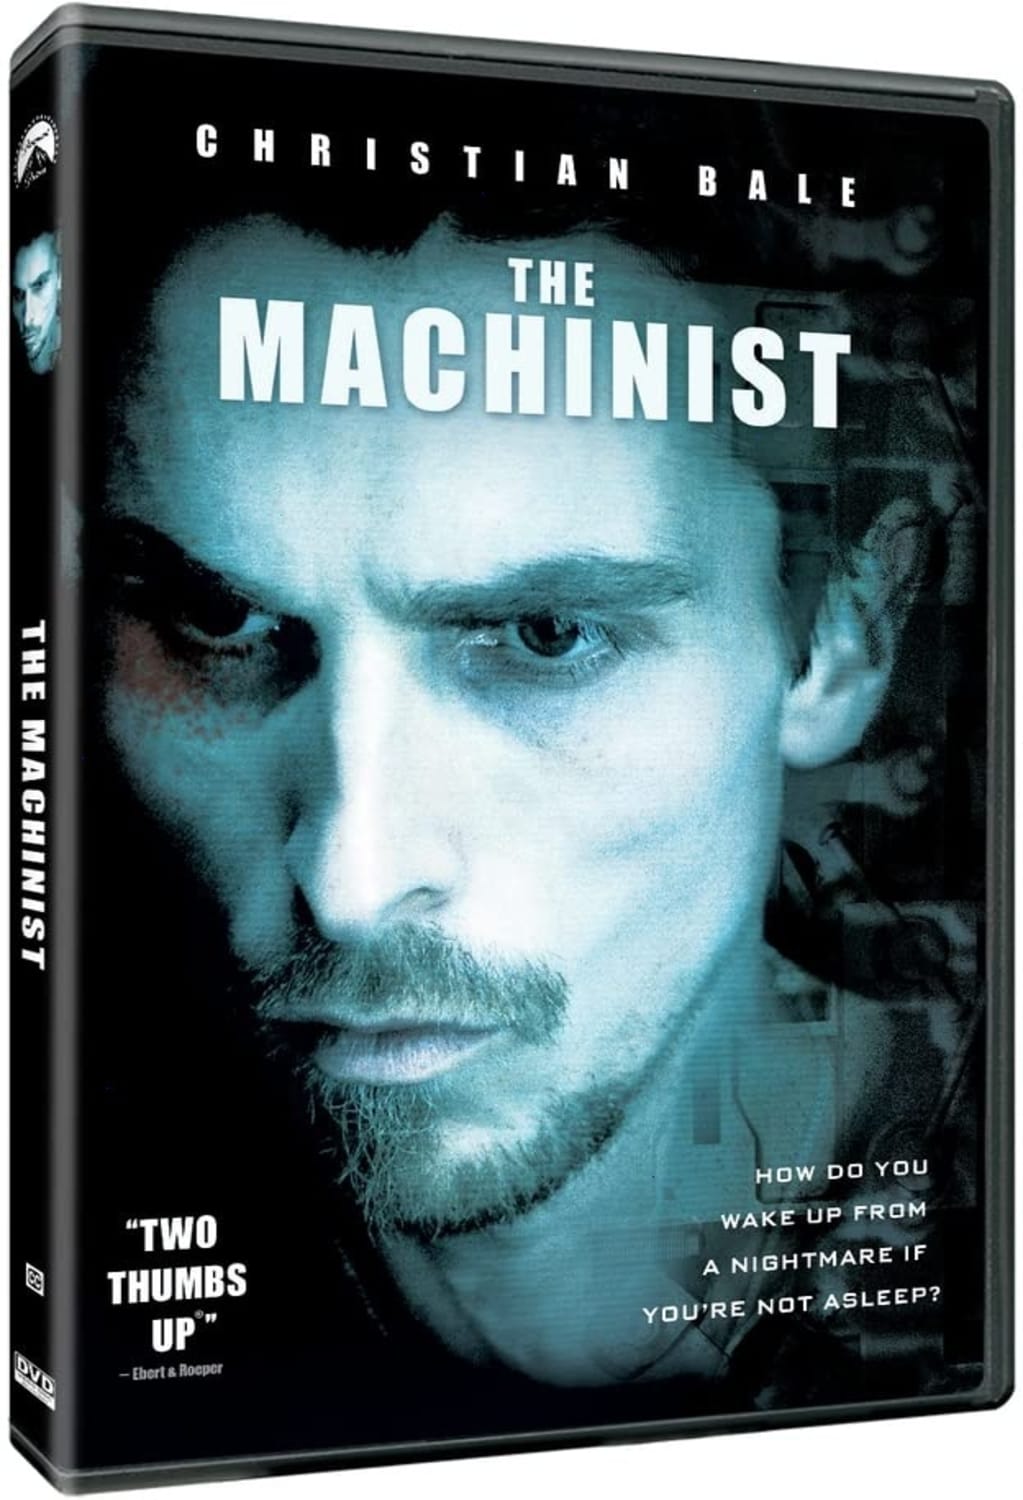 The Machinist (DVD) on MovieShack